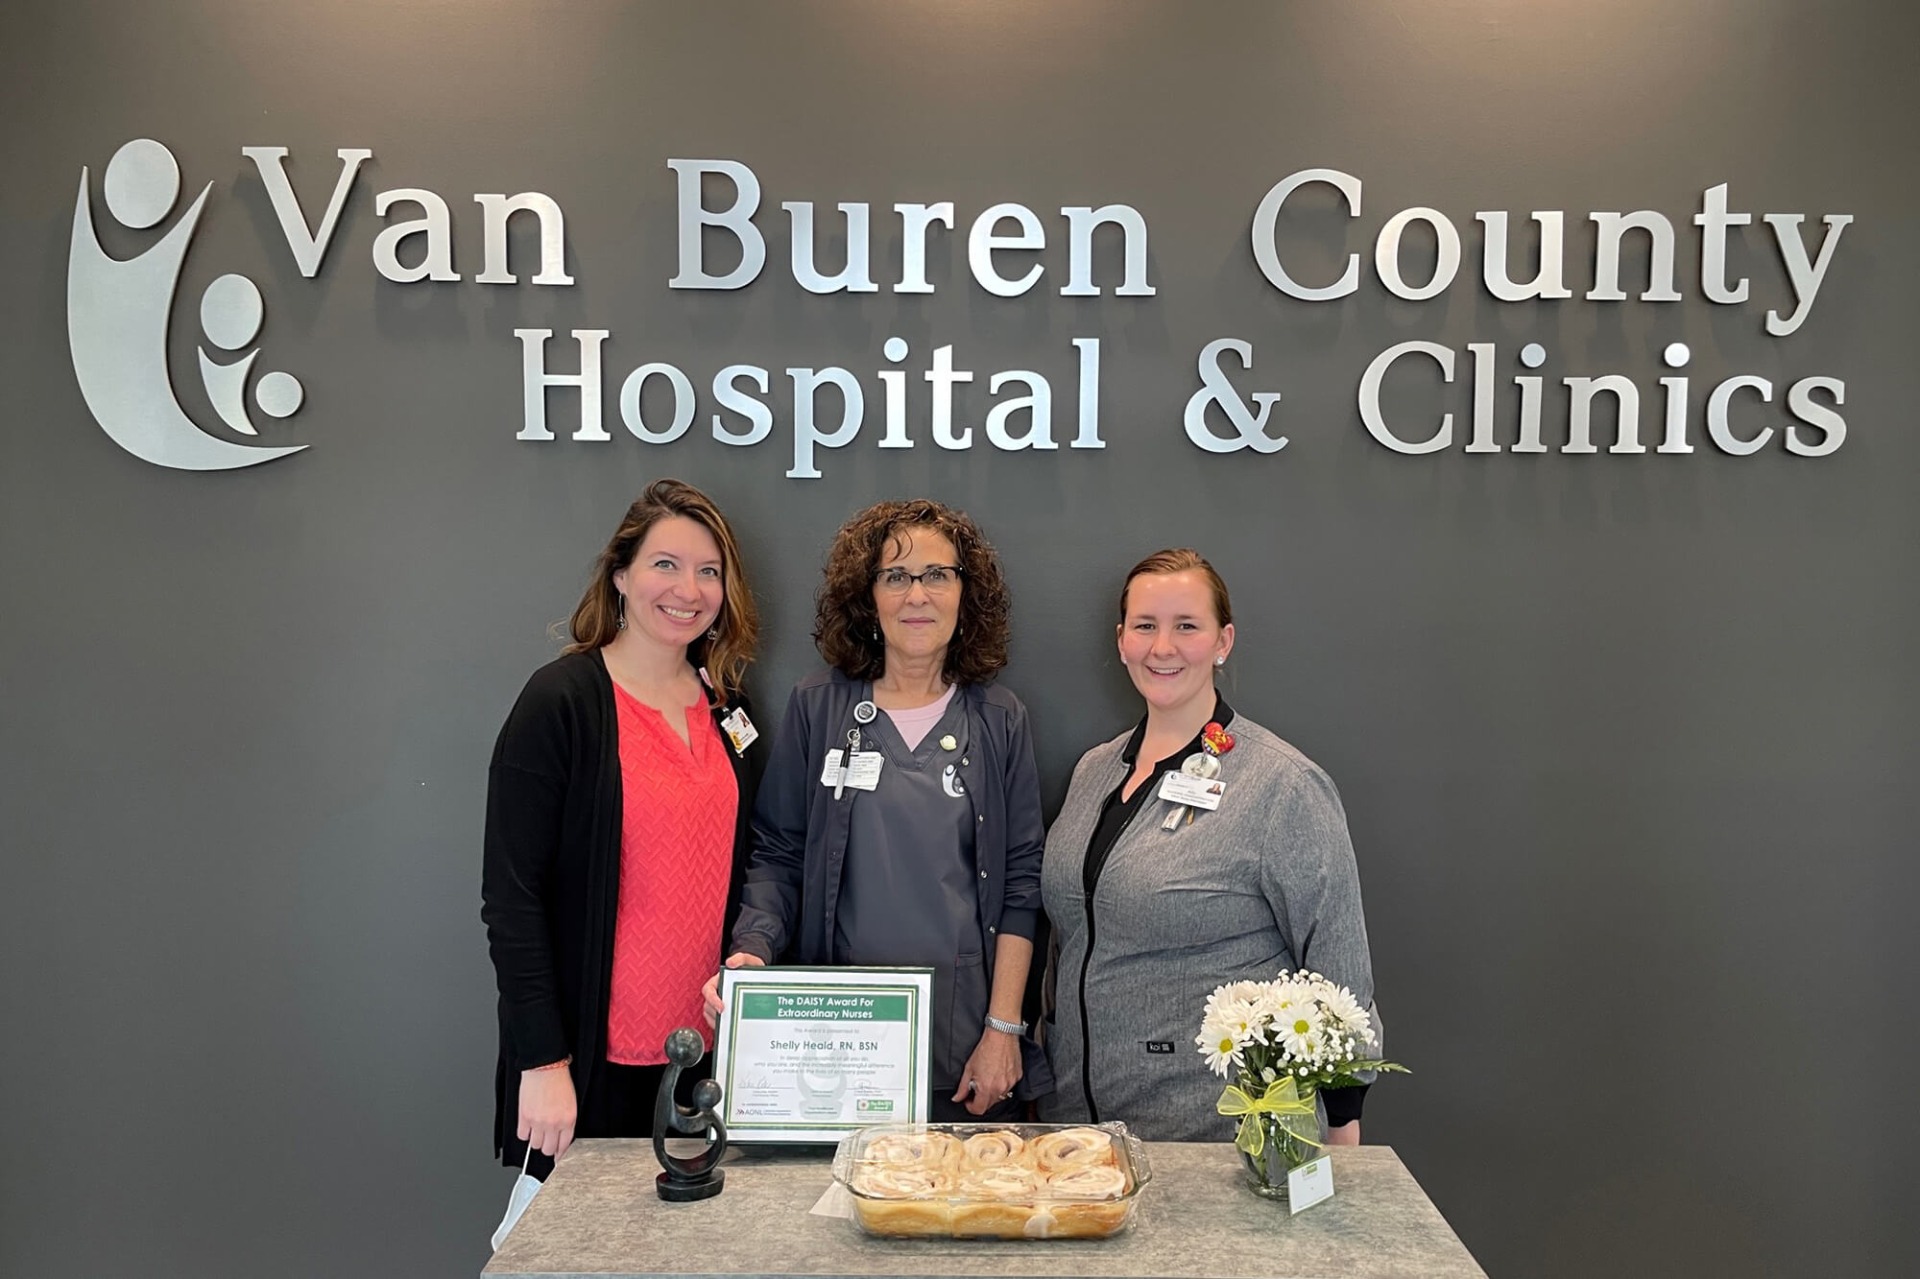 2022 DAISY Award winner Shelly Heald at Van Buren County Hospital